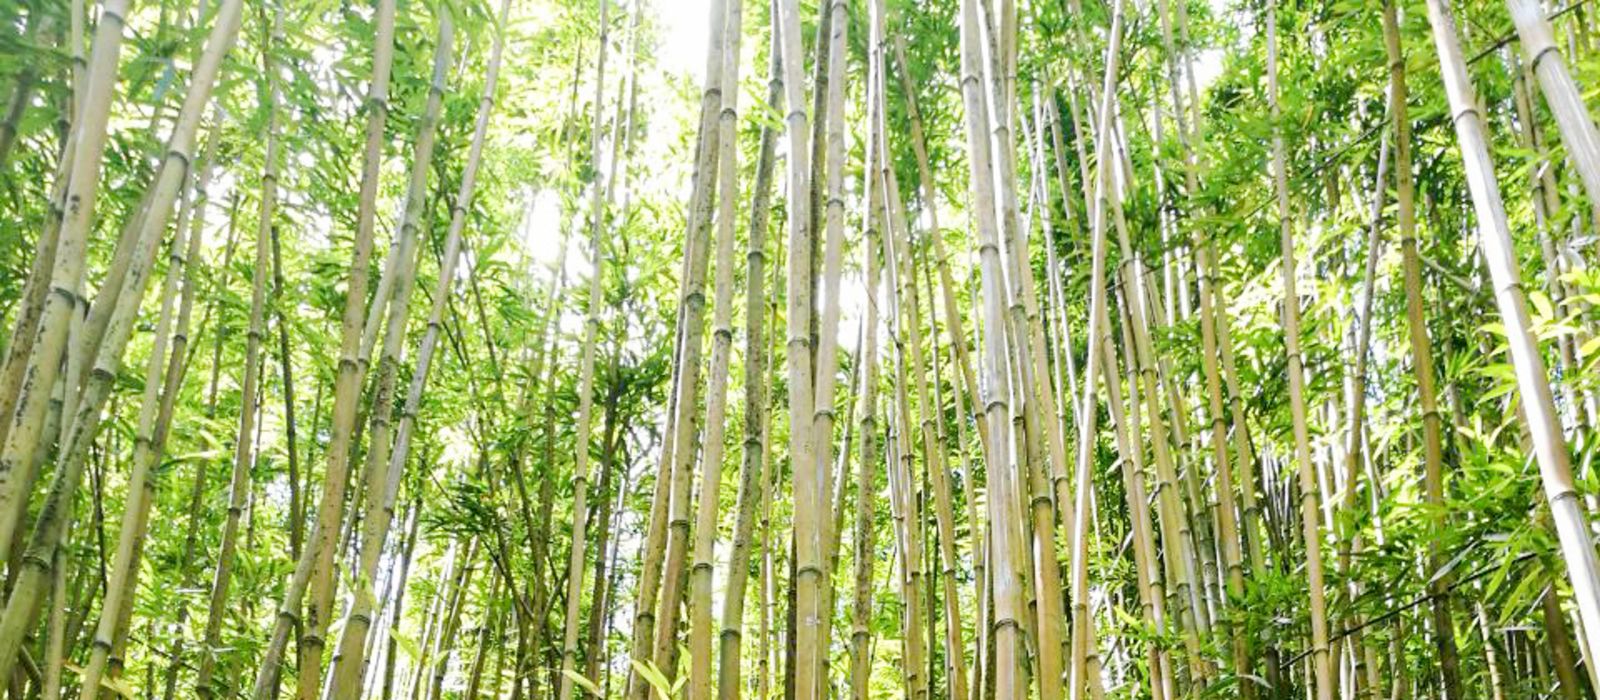 Bamboo Forest auf Maui, Hawaii